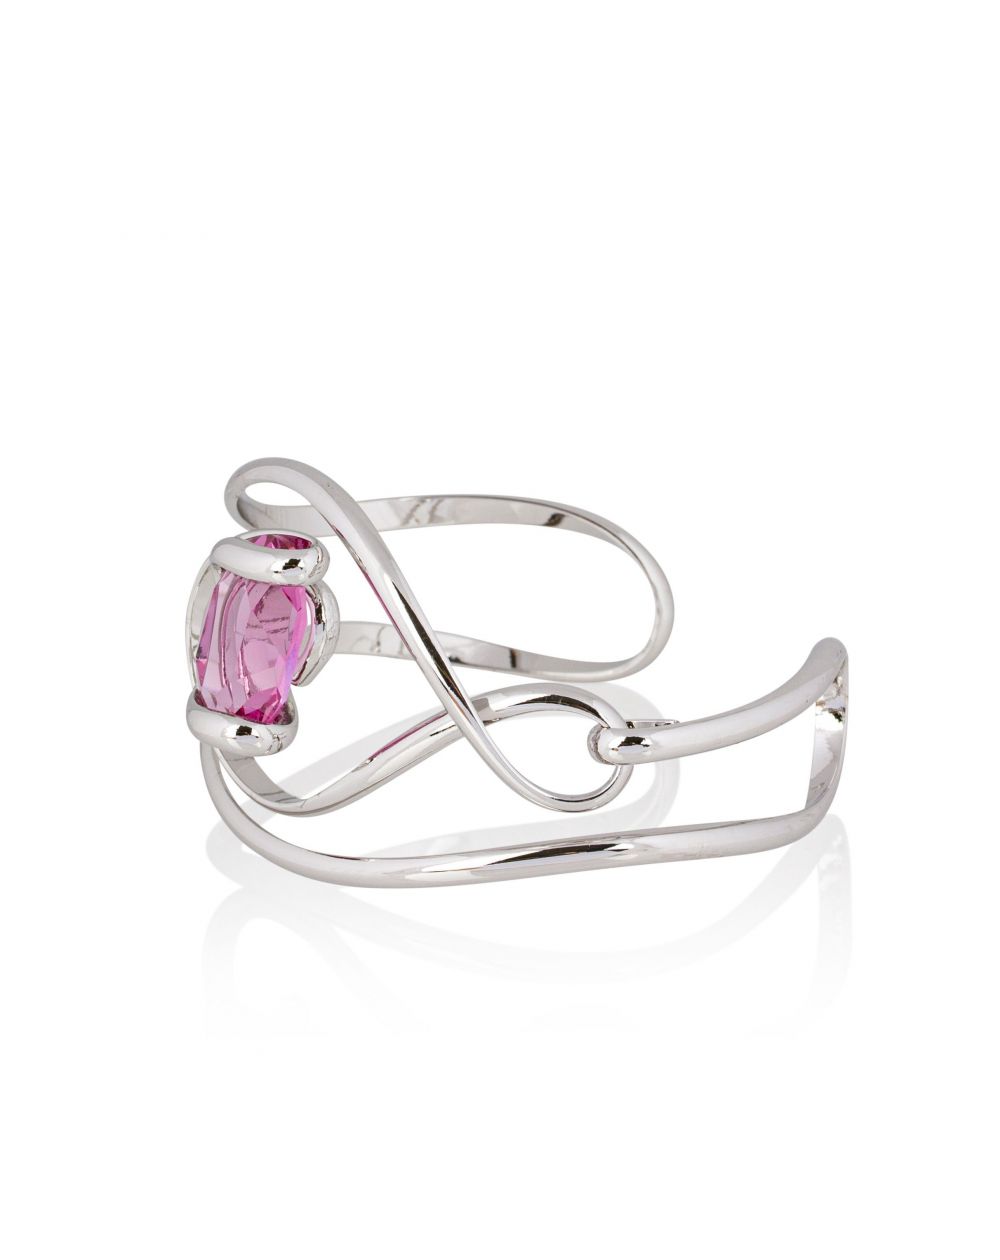 Andrea Marazzini bijoux - Bracelet cristal Swarovski Ovale Fuchsia BR2